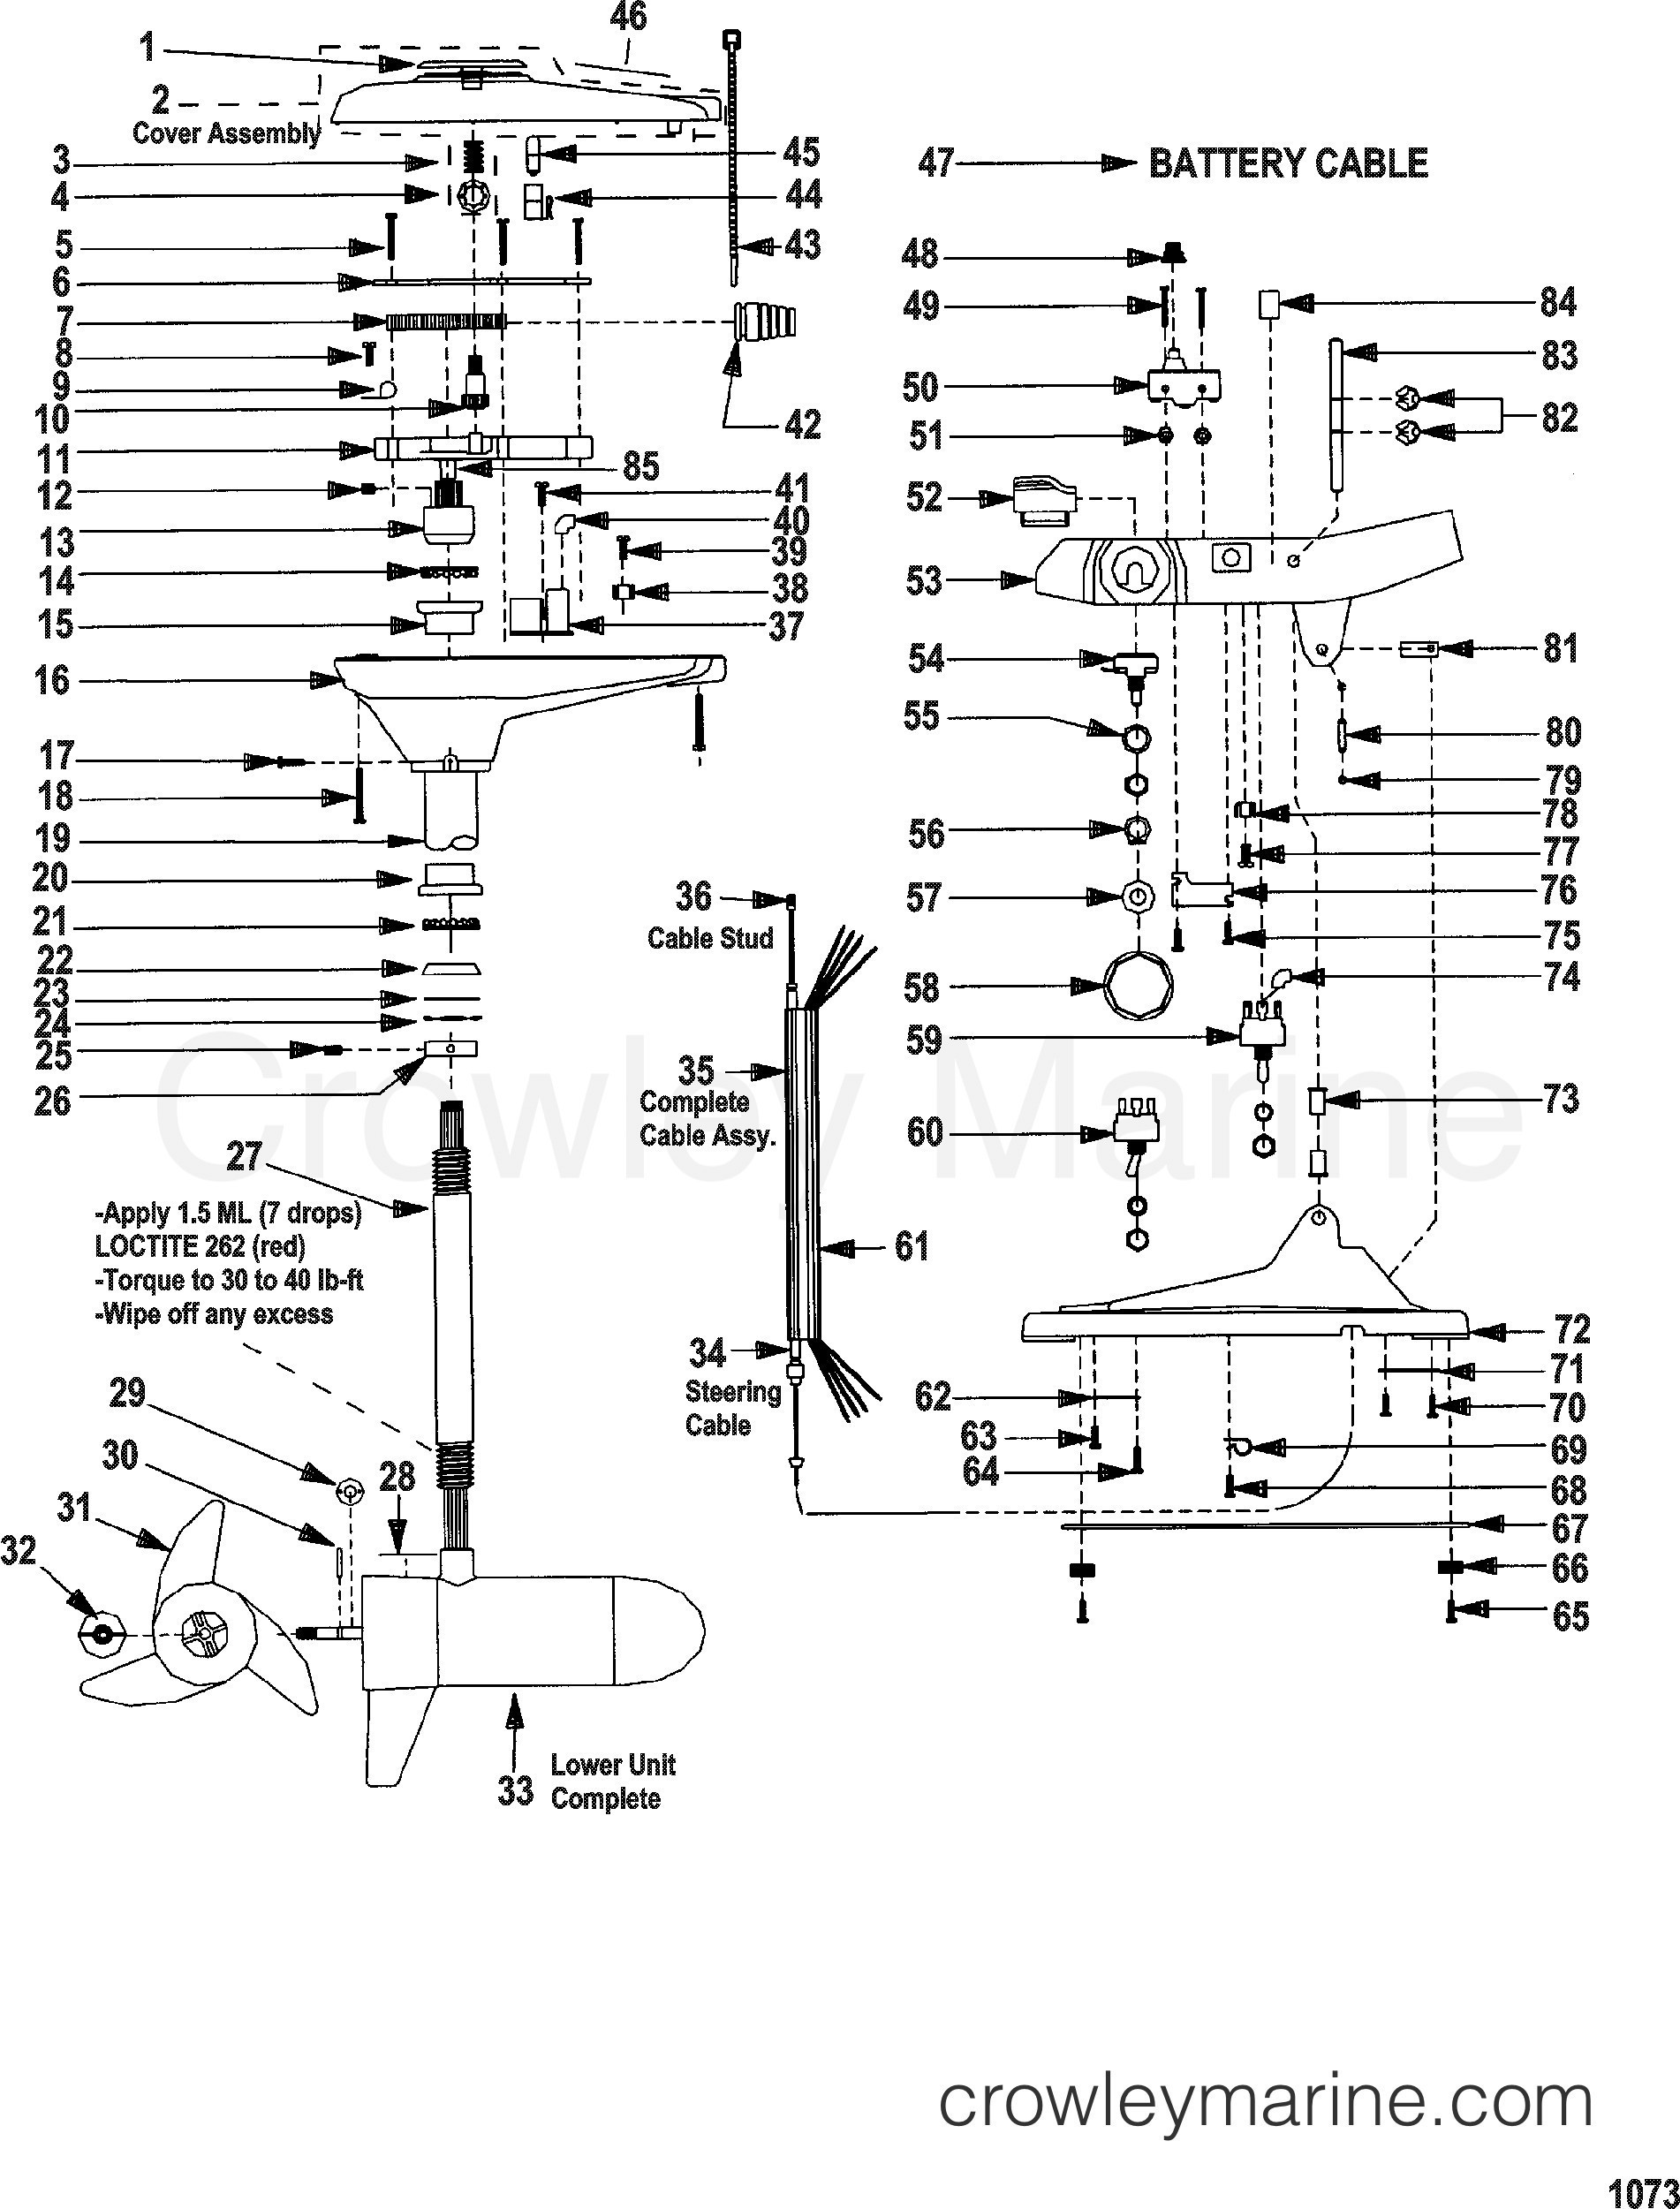 Motorguide Trolling Motor Wiring Diagram Example Trolling Motor Wiring Diagram New